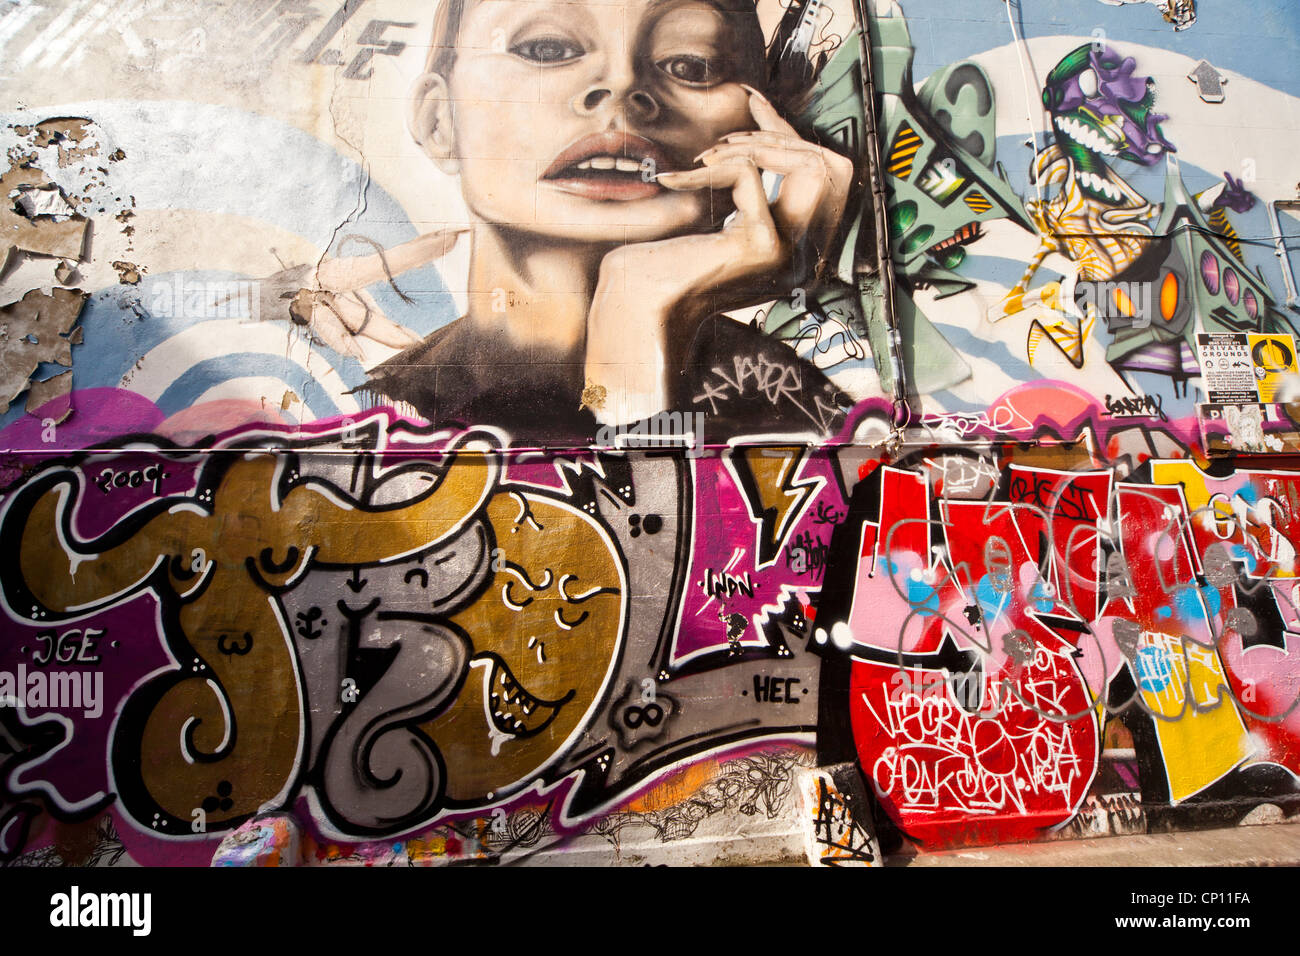 Graffiti and street art in Brick Lane, East London, UK Stock Photo